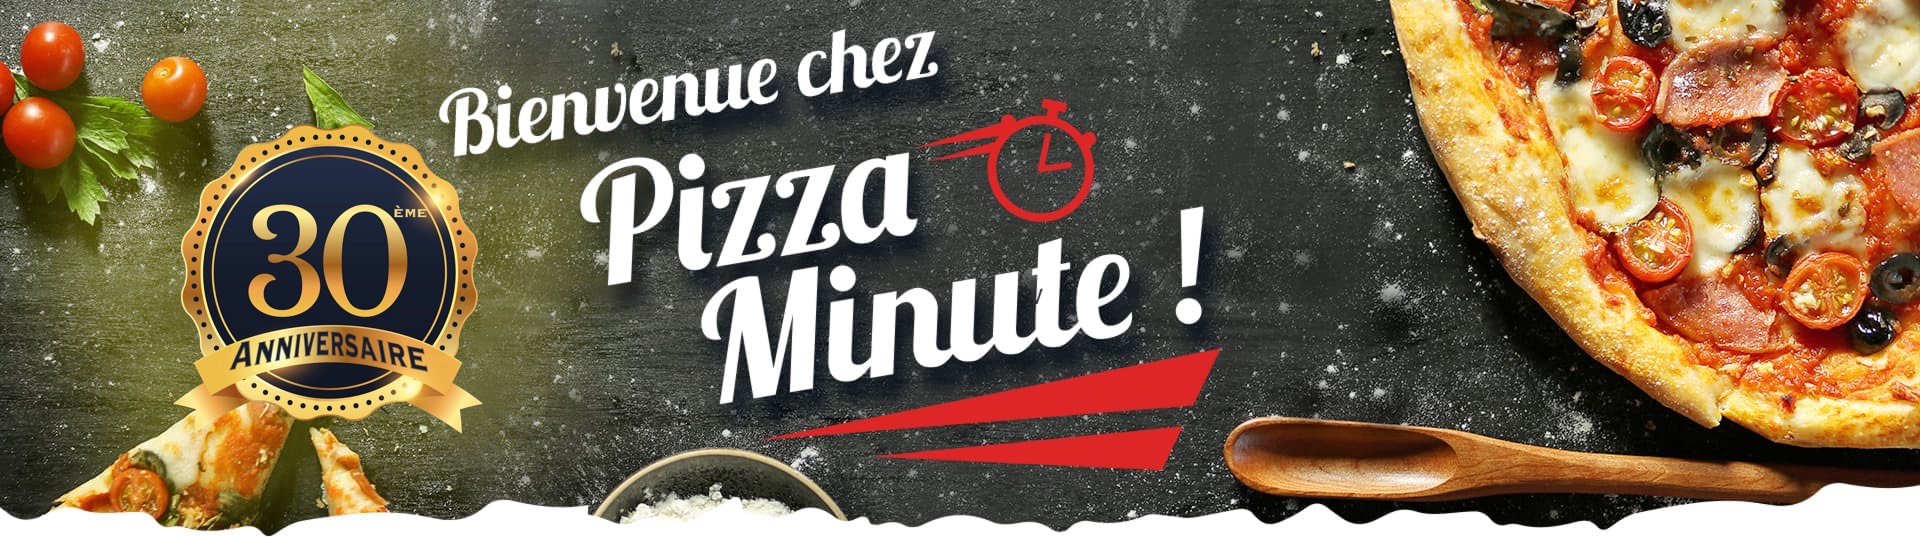 pizza minute calais